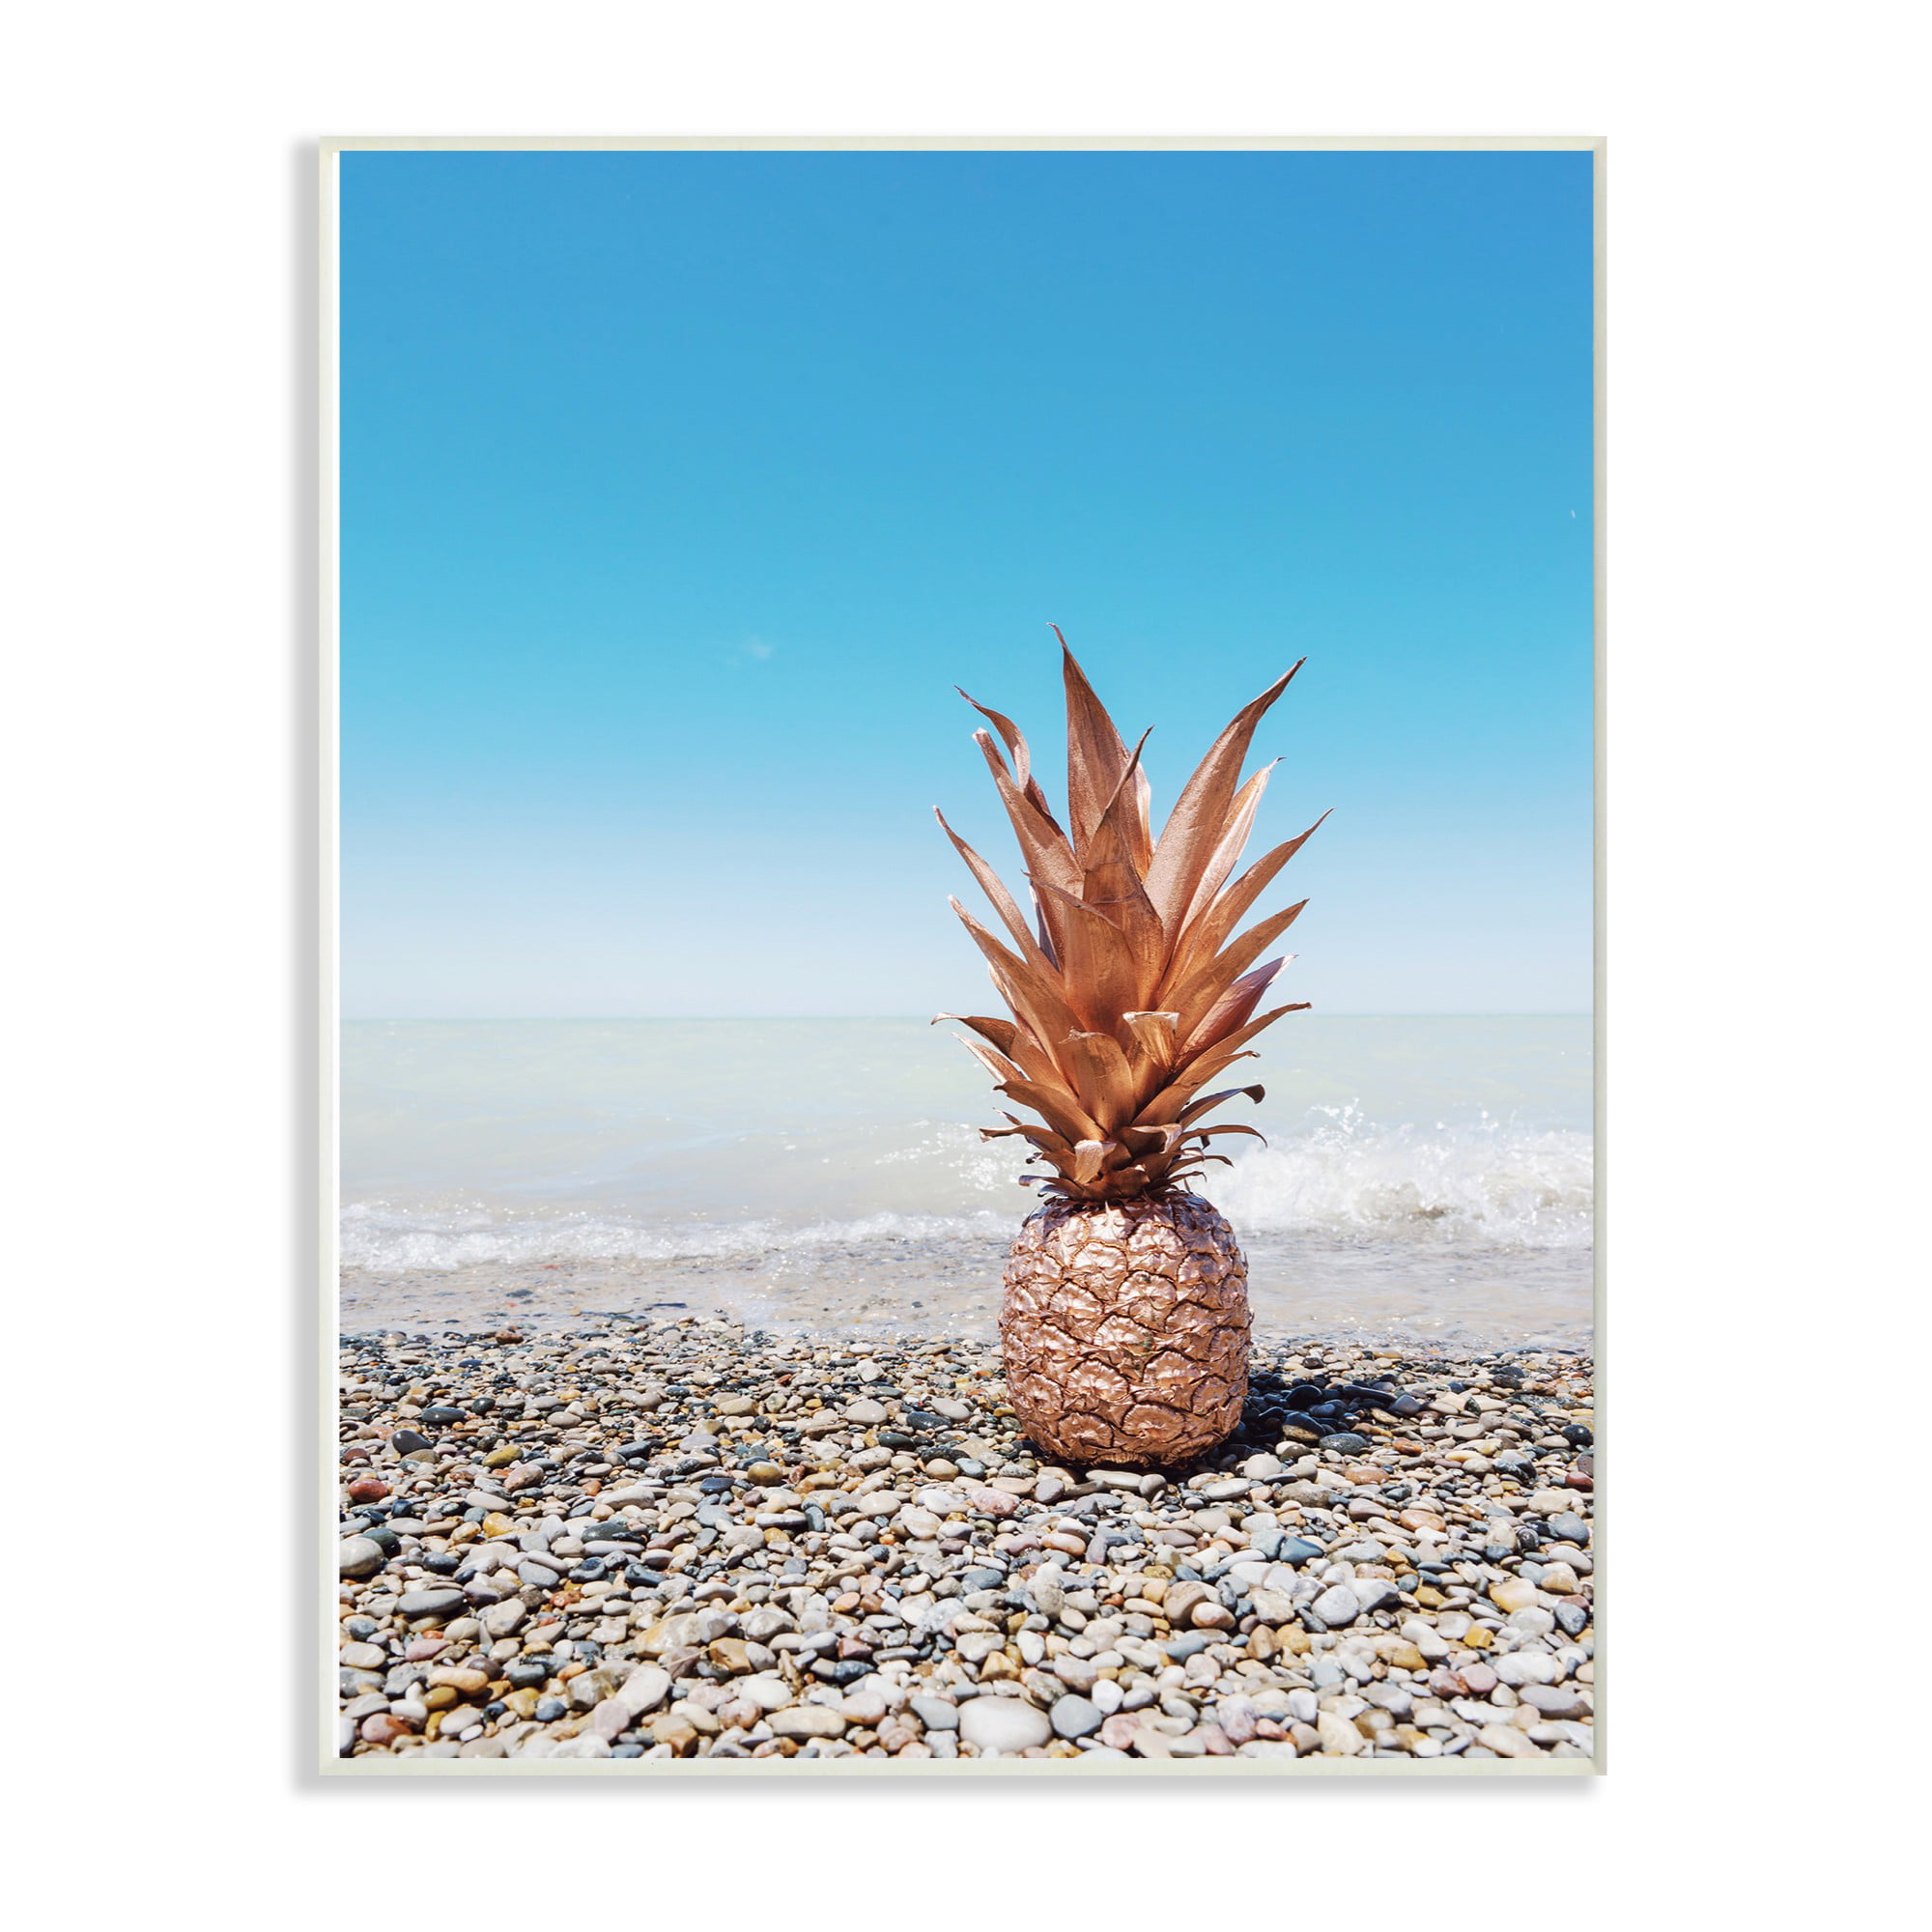 Smiling Pineapple in Sunglasses Art Print Poster 12x18